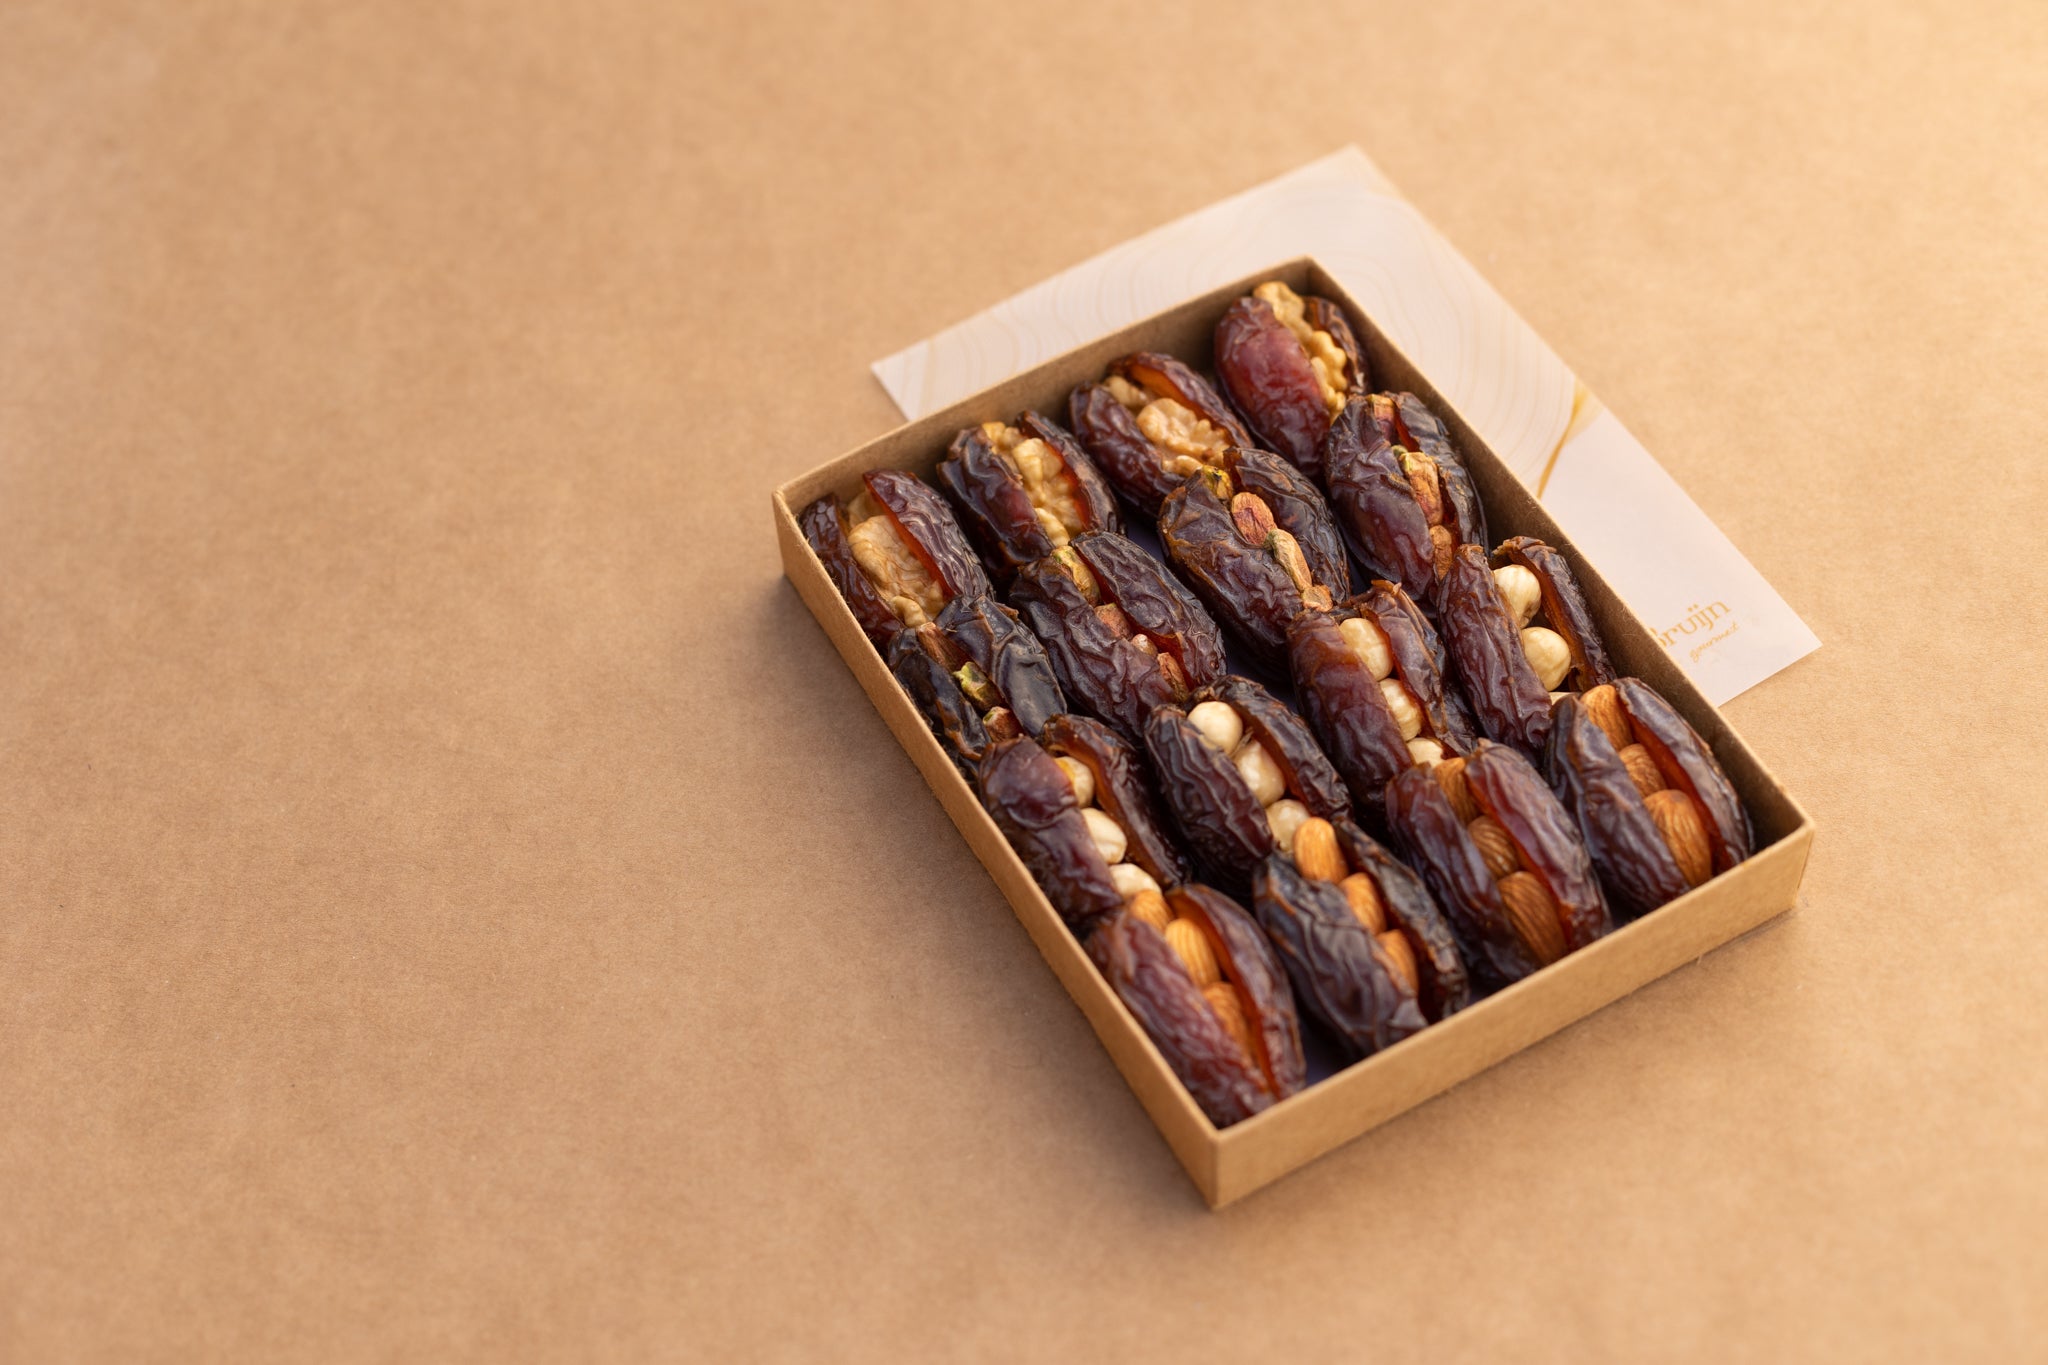 500g Farm Fresh Medjool dates stuffed with assorted nuts